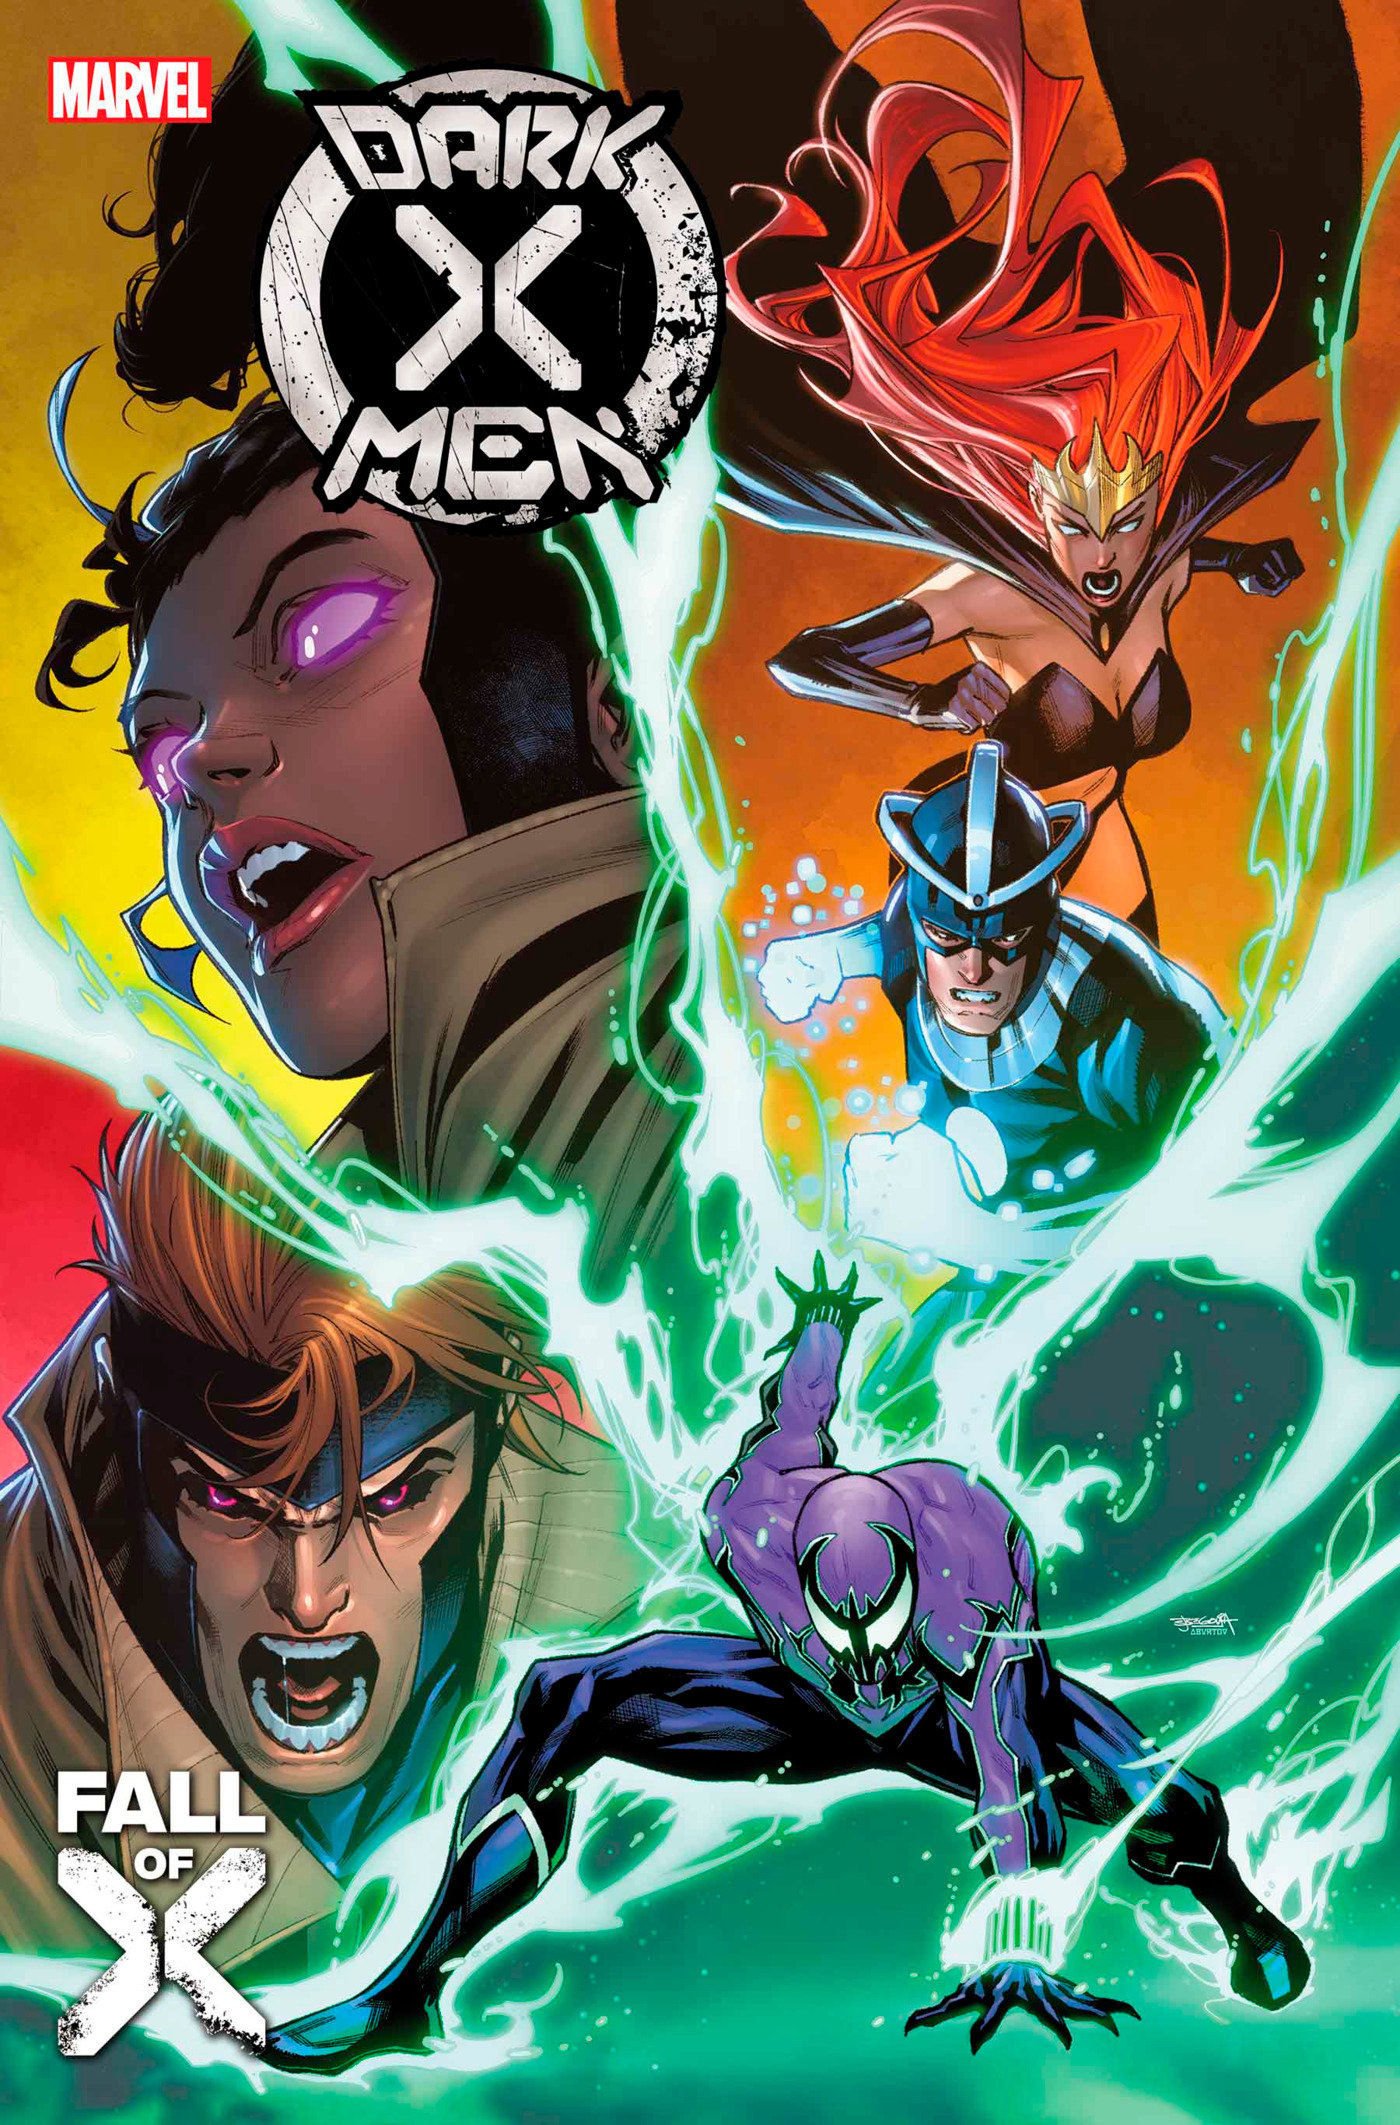 Dark X-Men #4 (Fall of X)